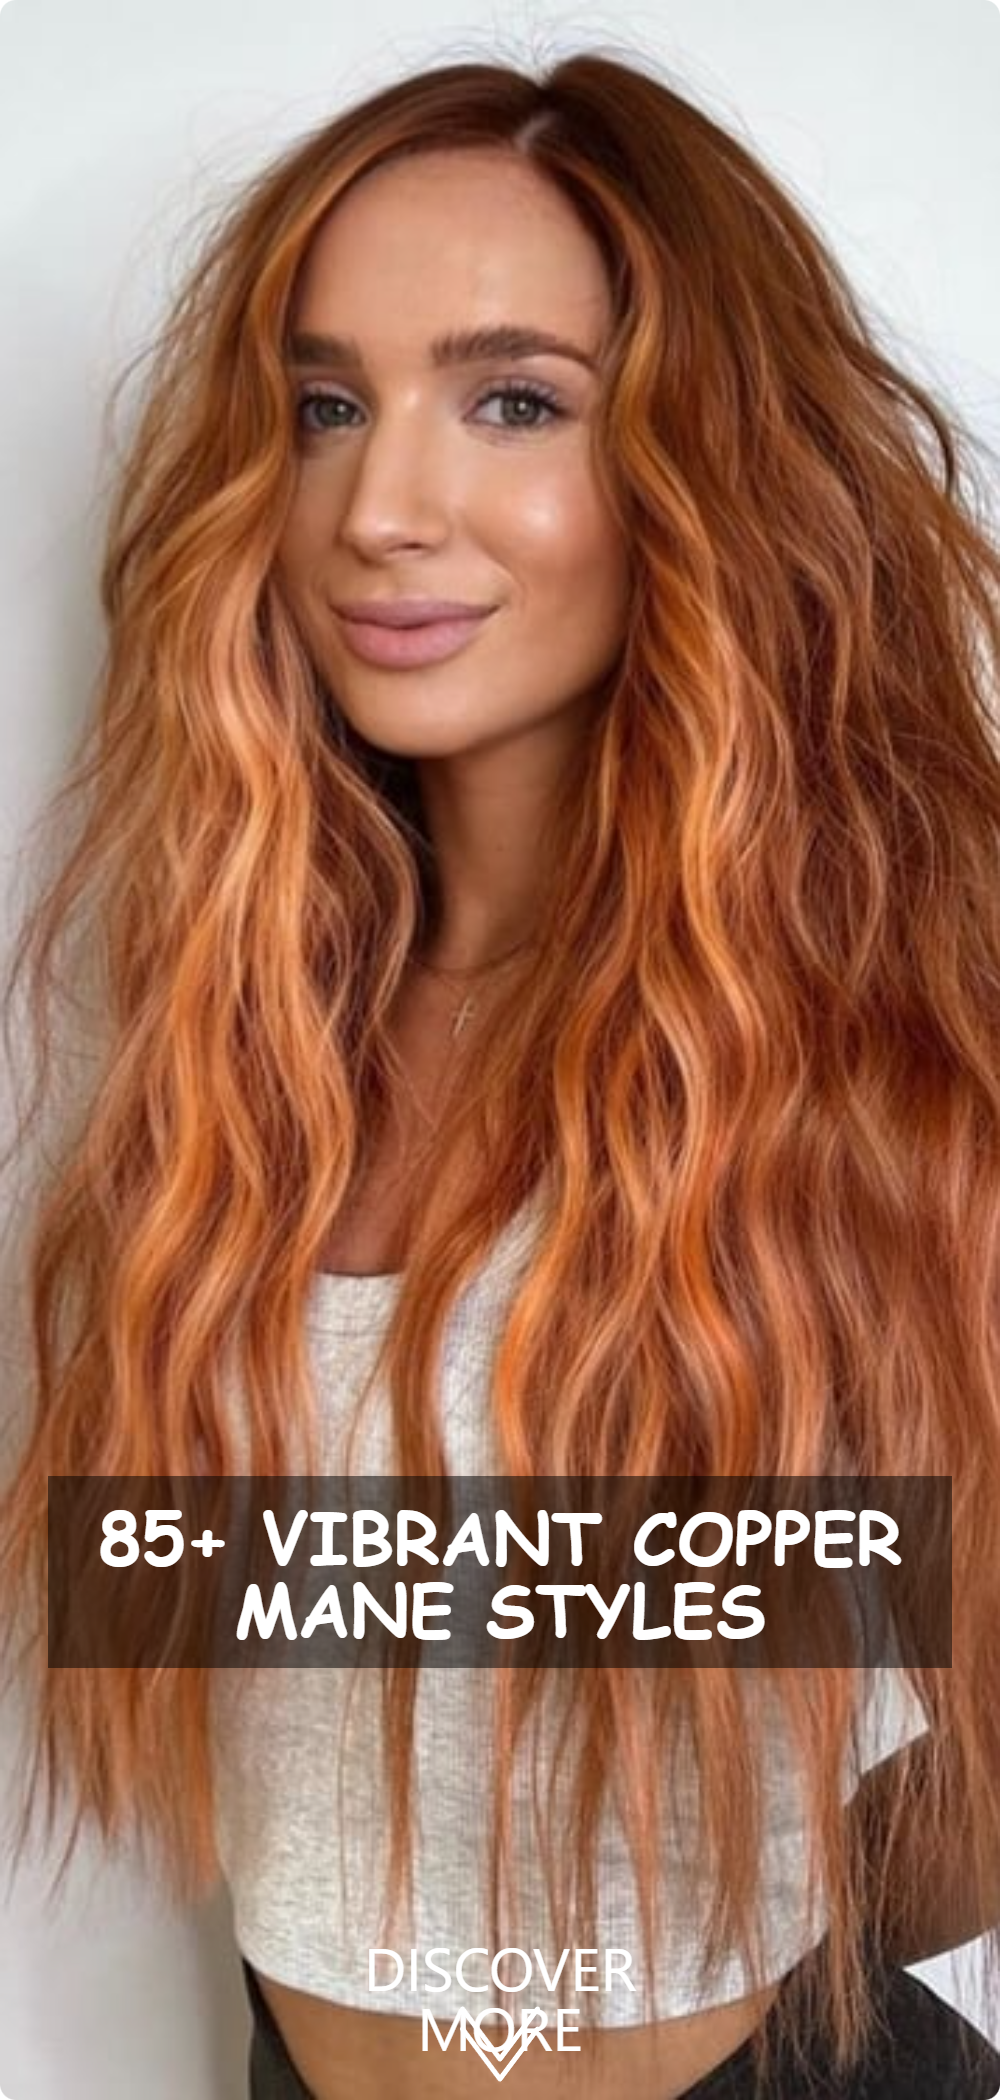 Vibrant Copper Mane